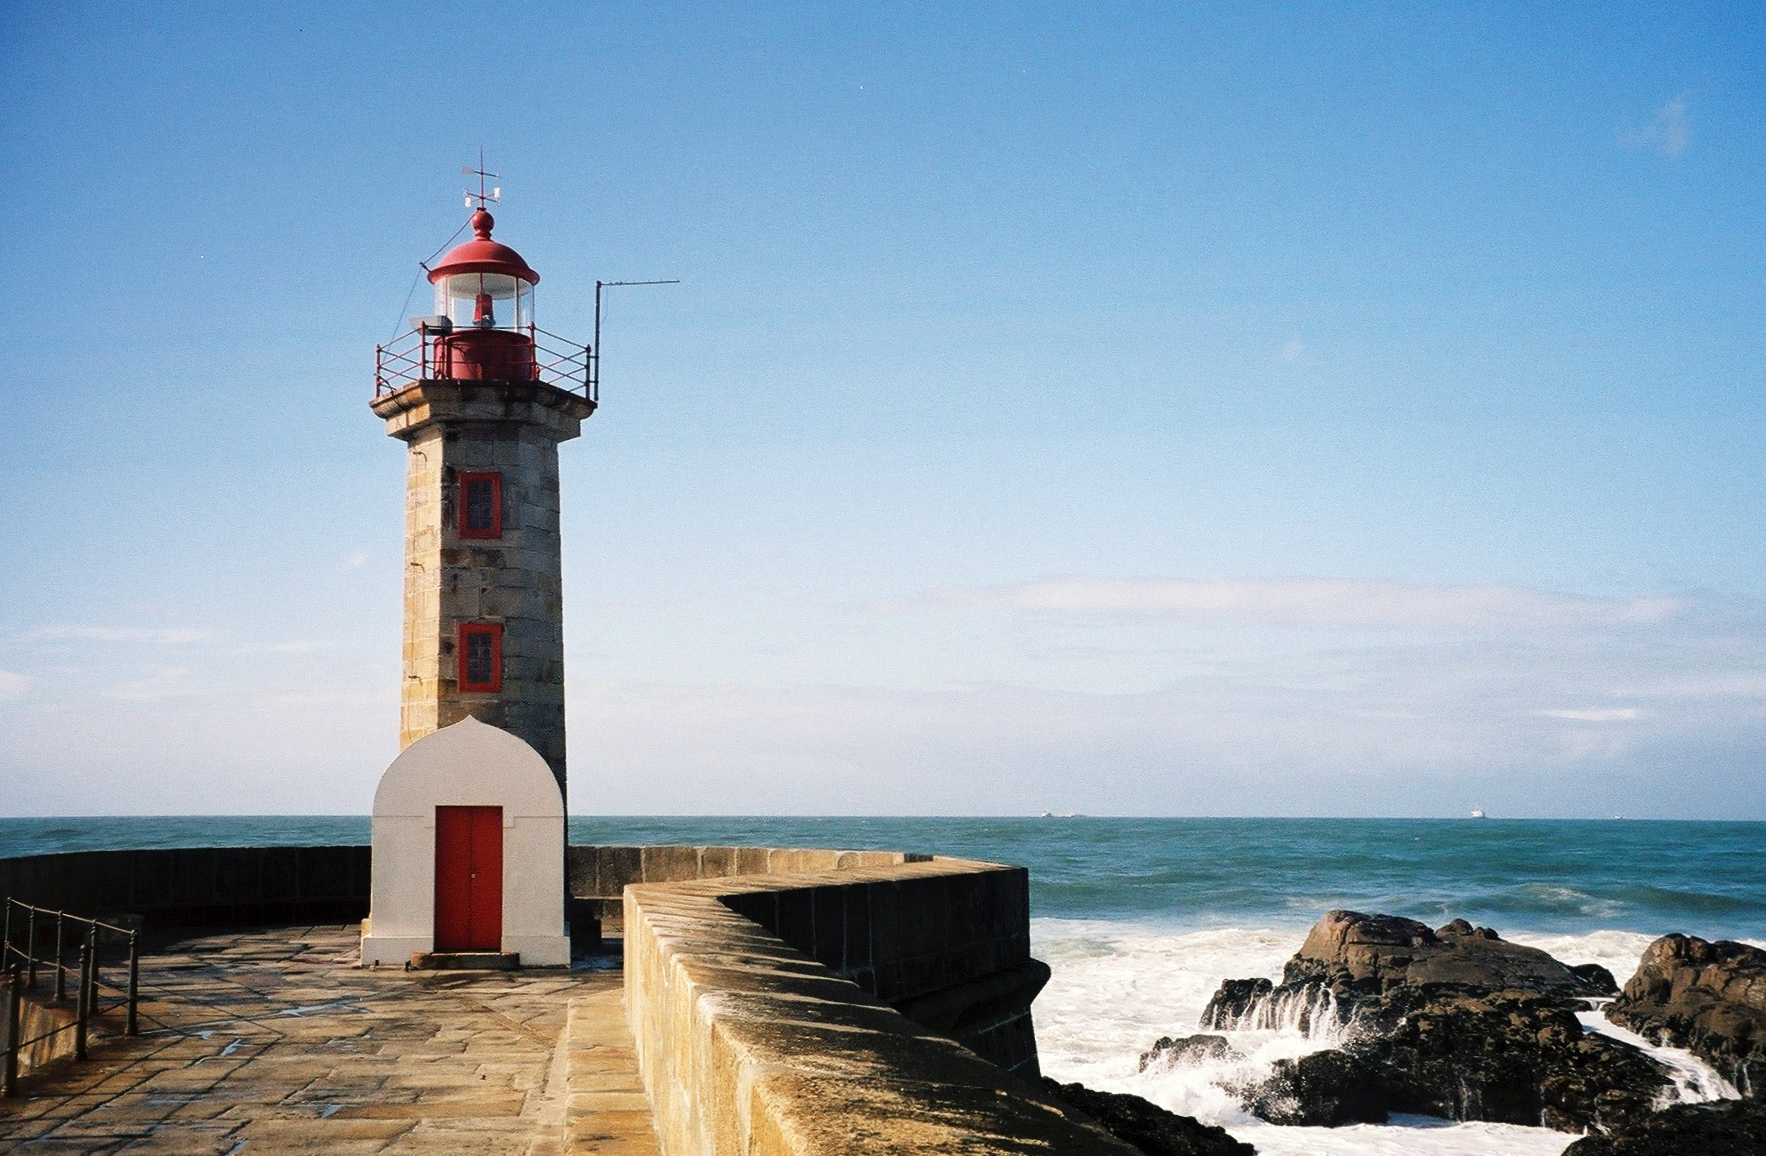 File:Felgueiras Lighthouse and Pier 3.JPG - Wikimedia Commons